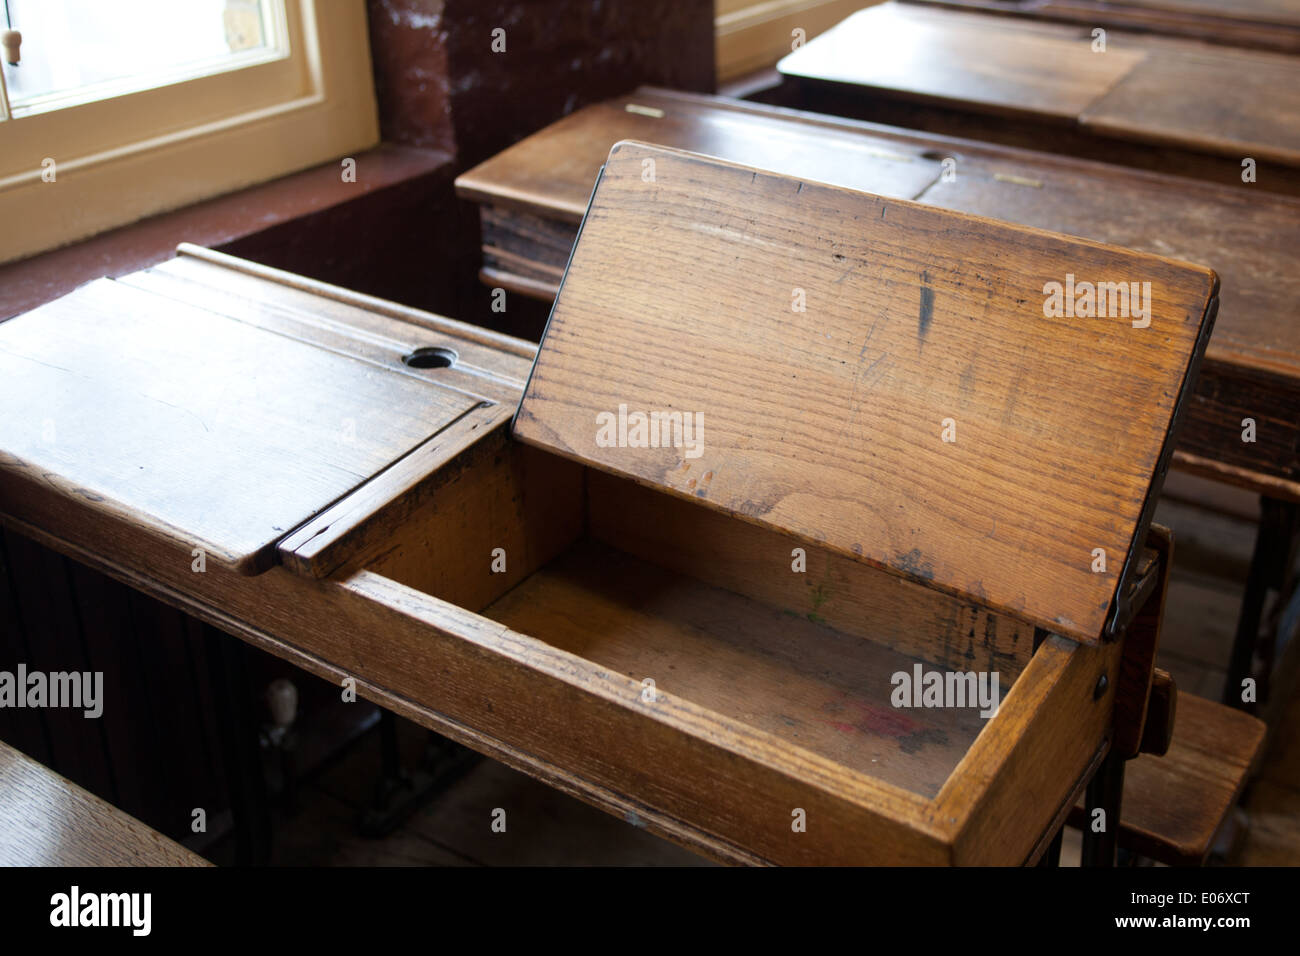 Victorian School Desk With Lid Open Stock Photo 68993928 Alamy